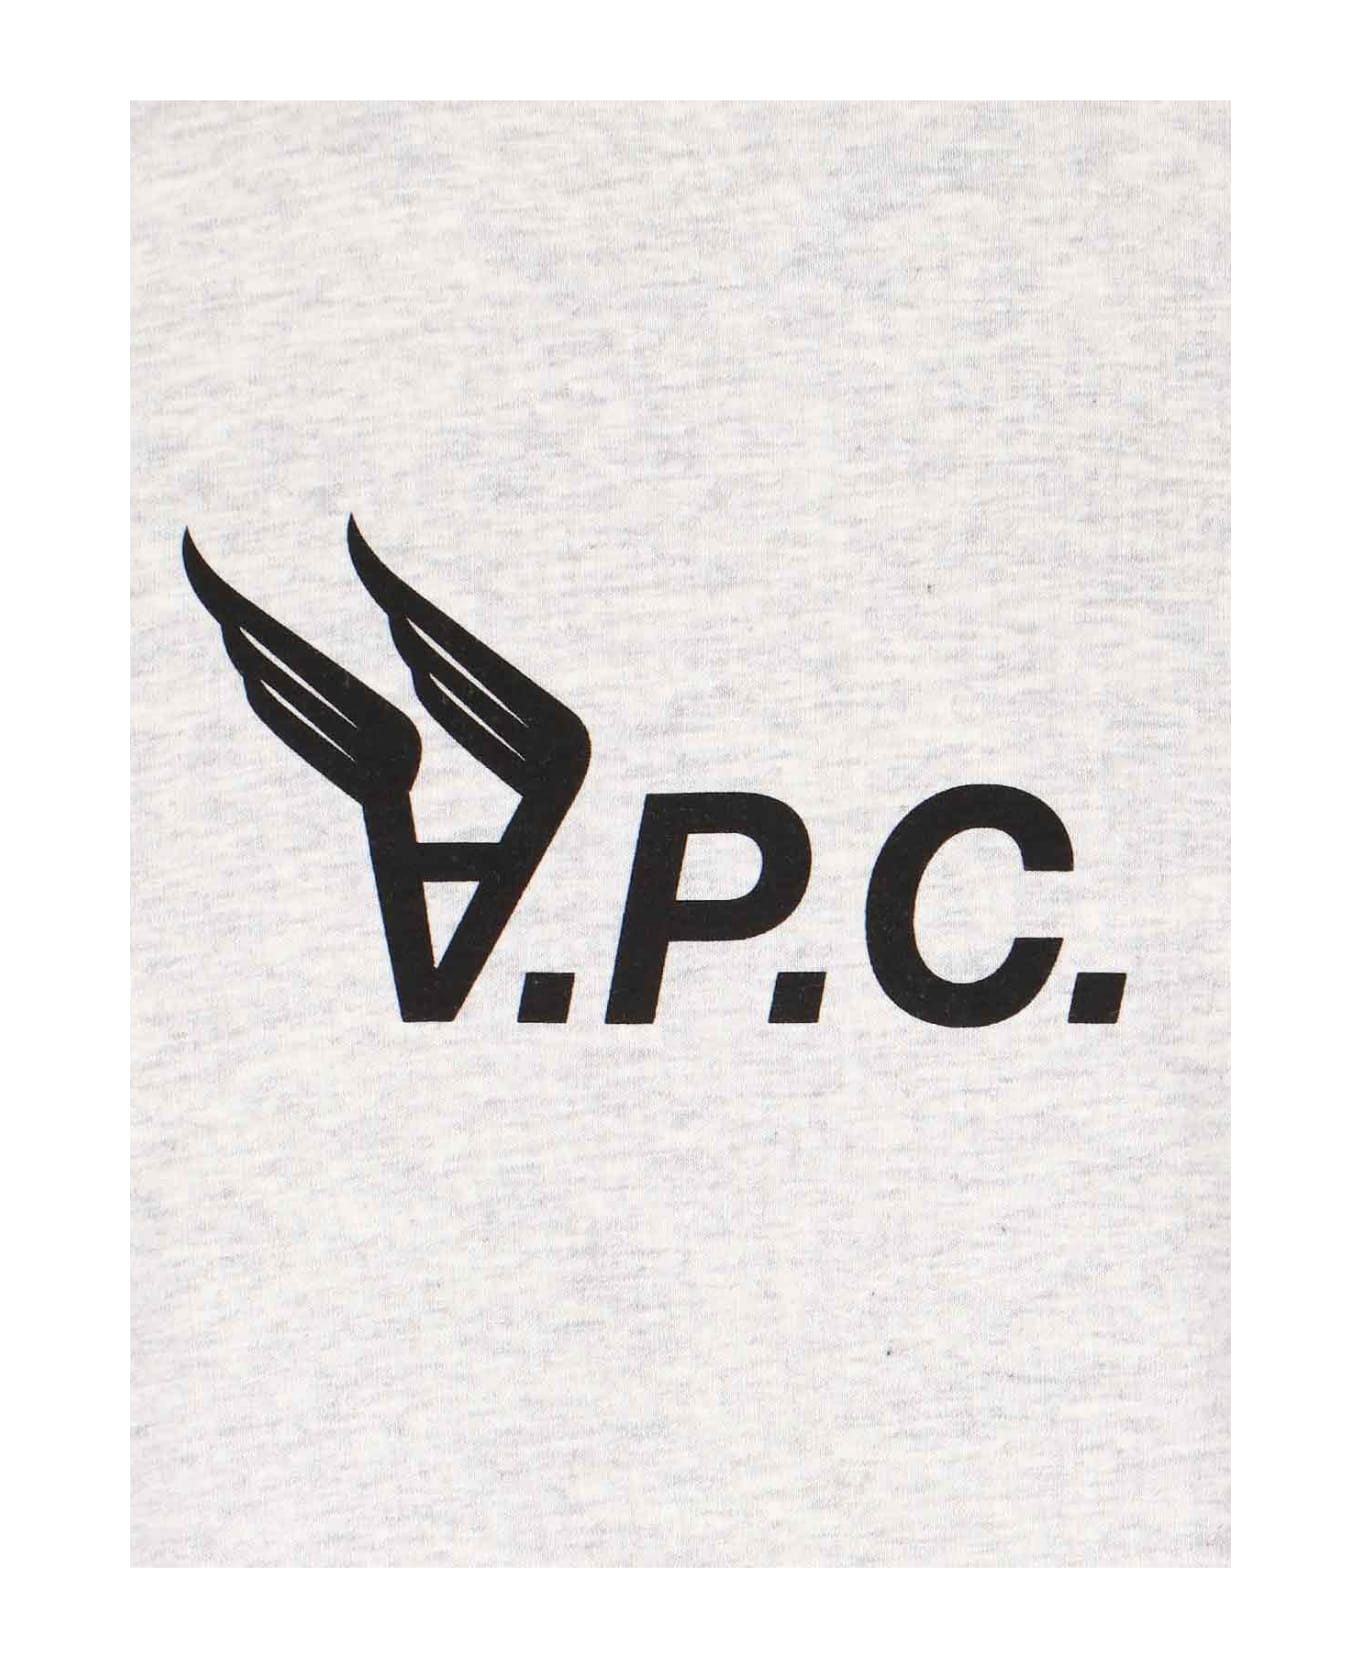 A.P.C. Hermance T-shirt - Grey